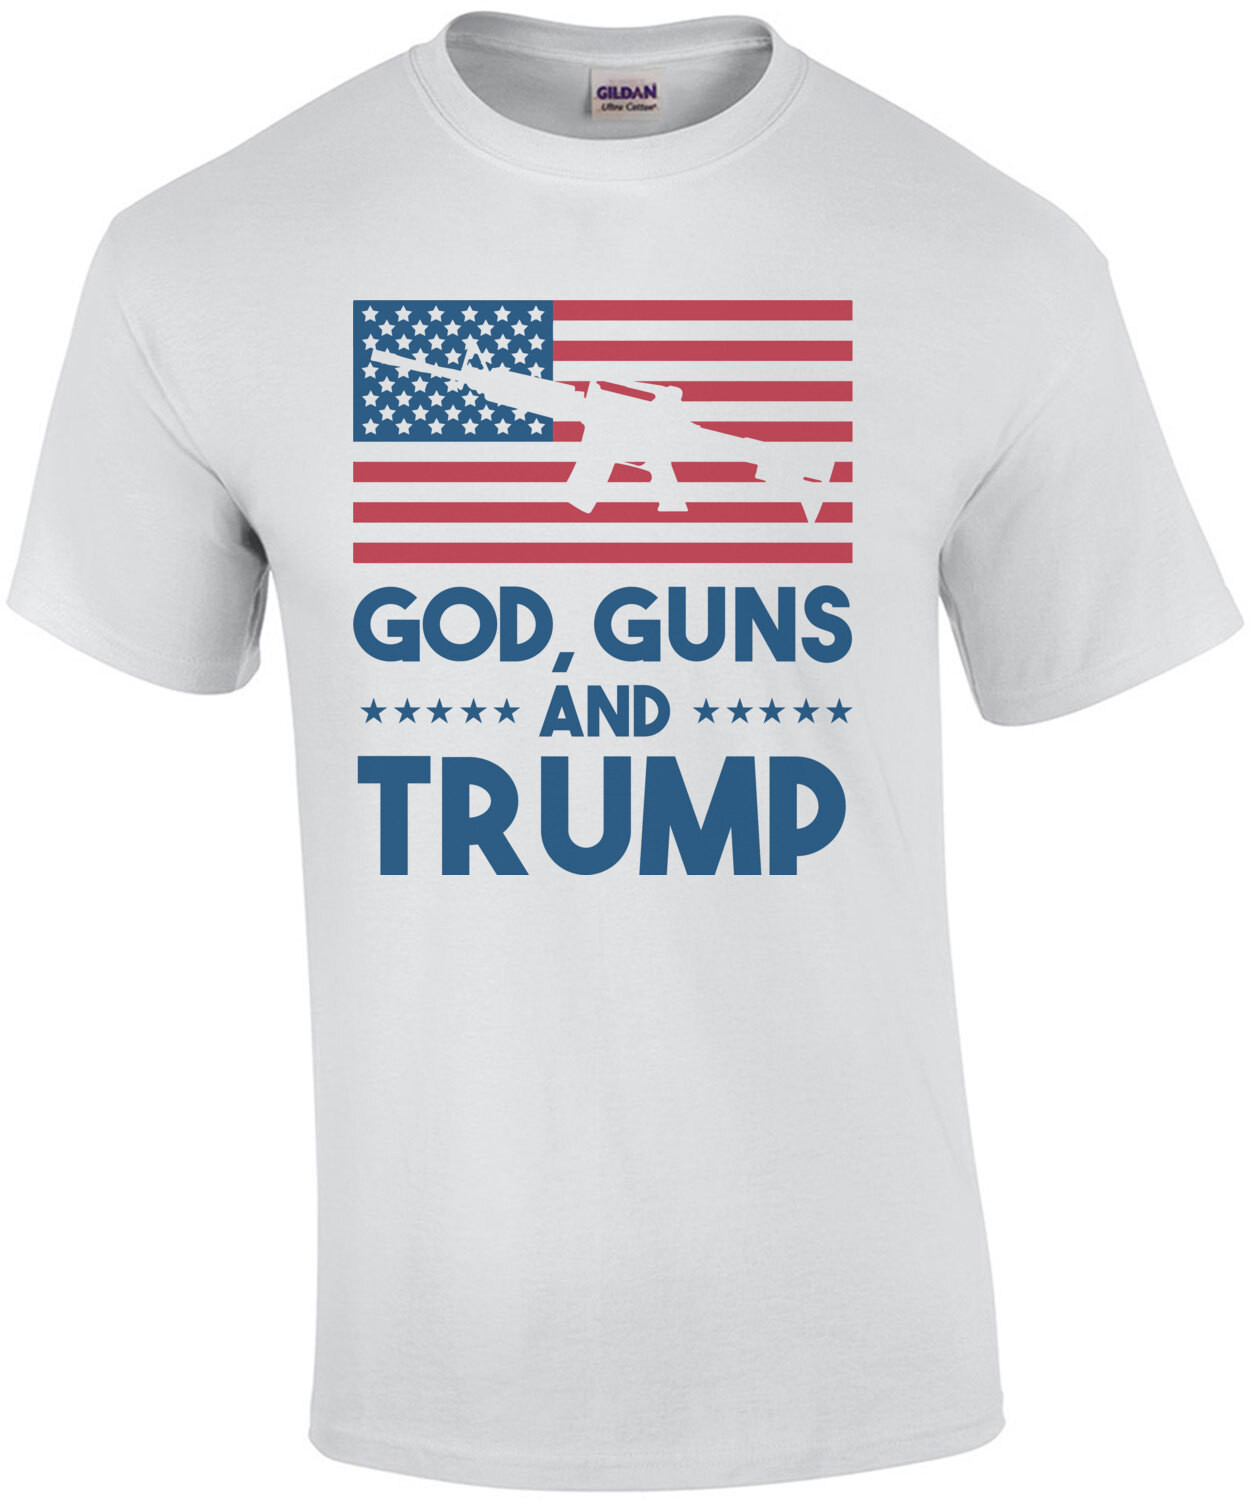 God Guns and Trump - Political T-Shirt